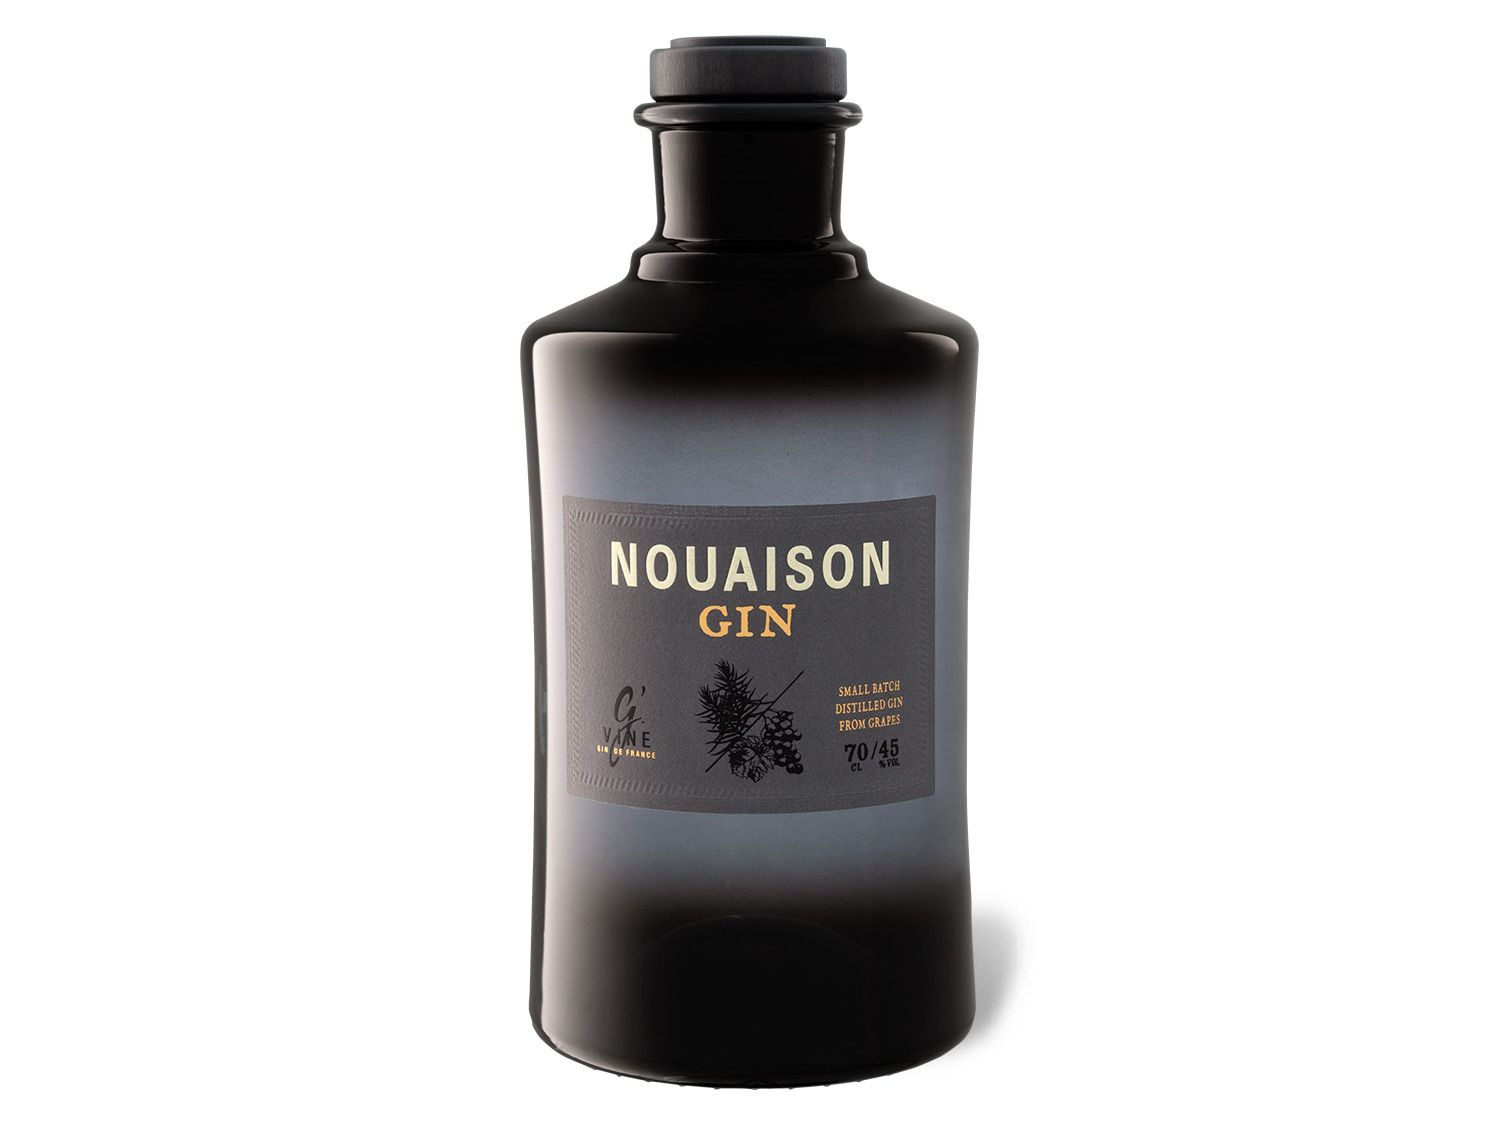 Nouaison Gin by G\'Vine 45% Vol online kaufen | LIDL